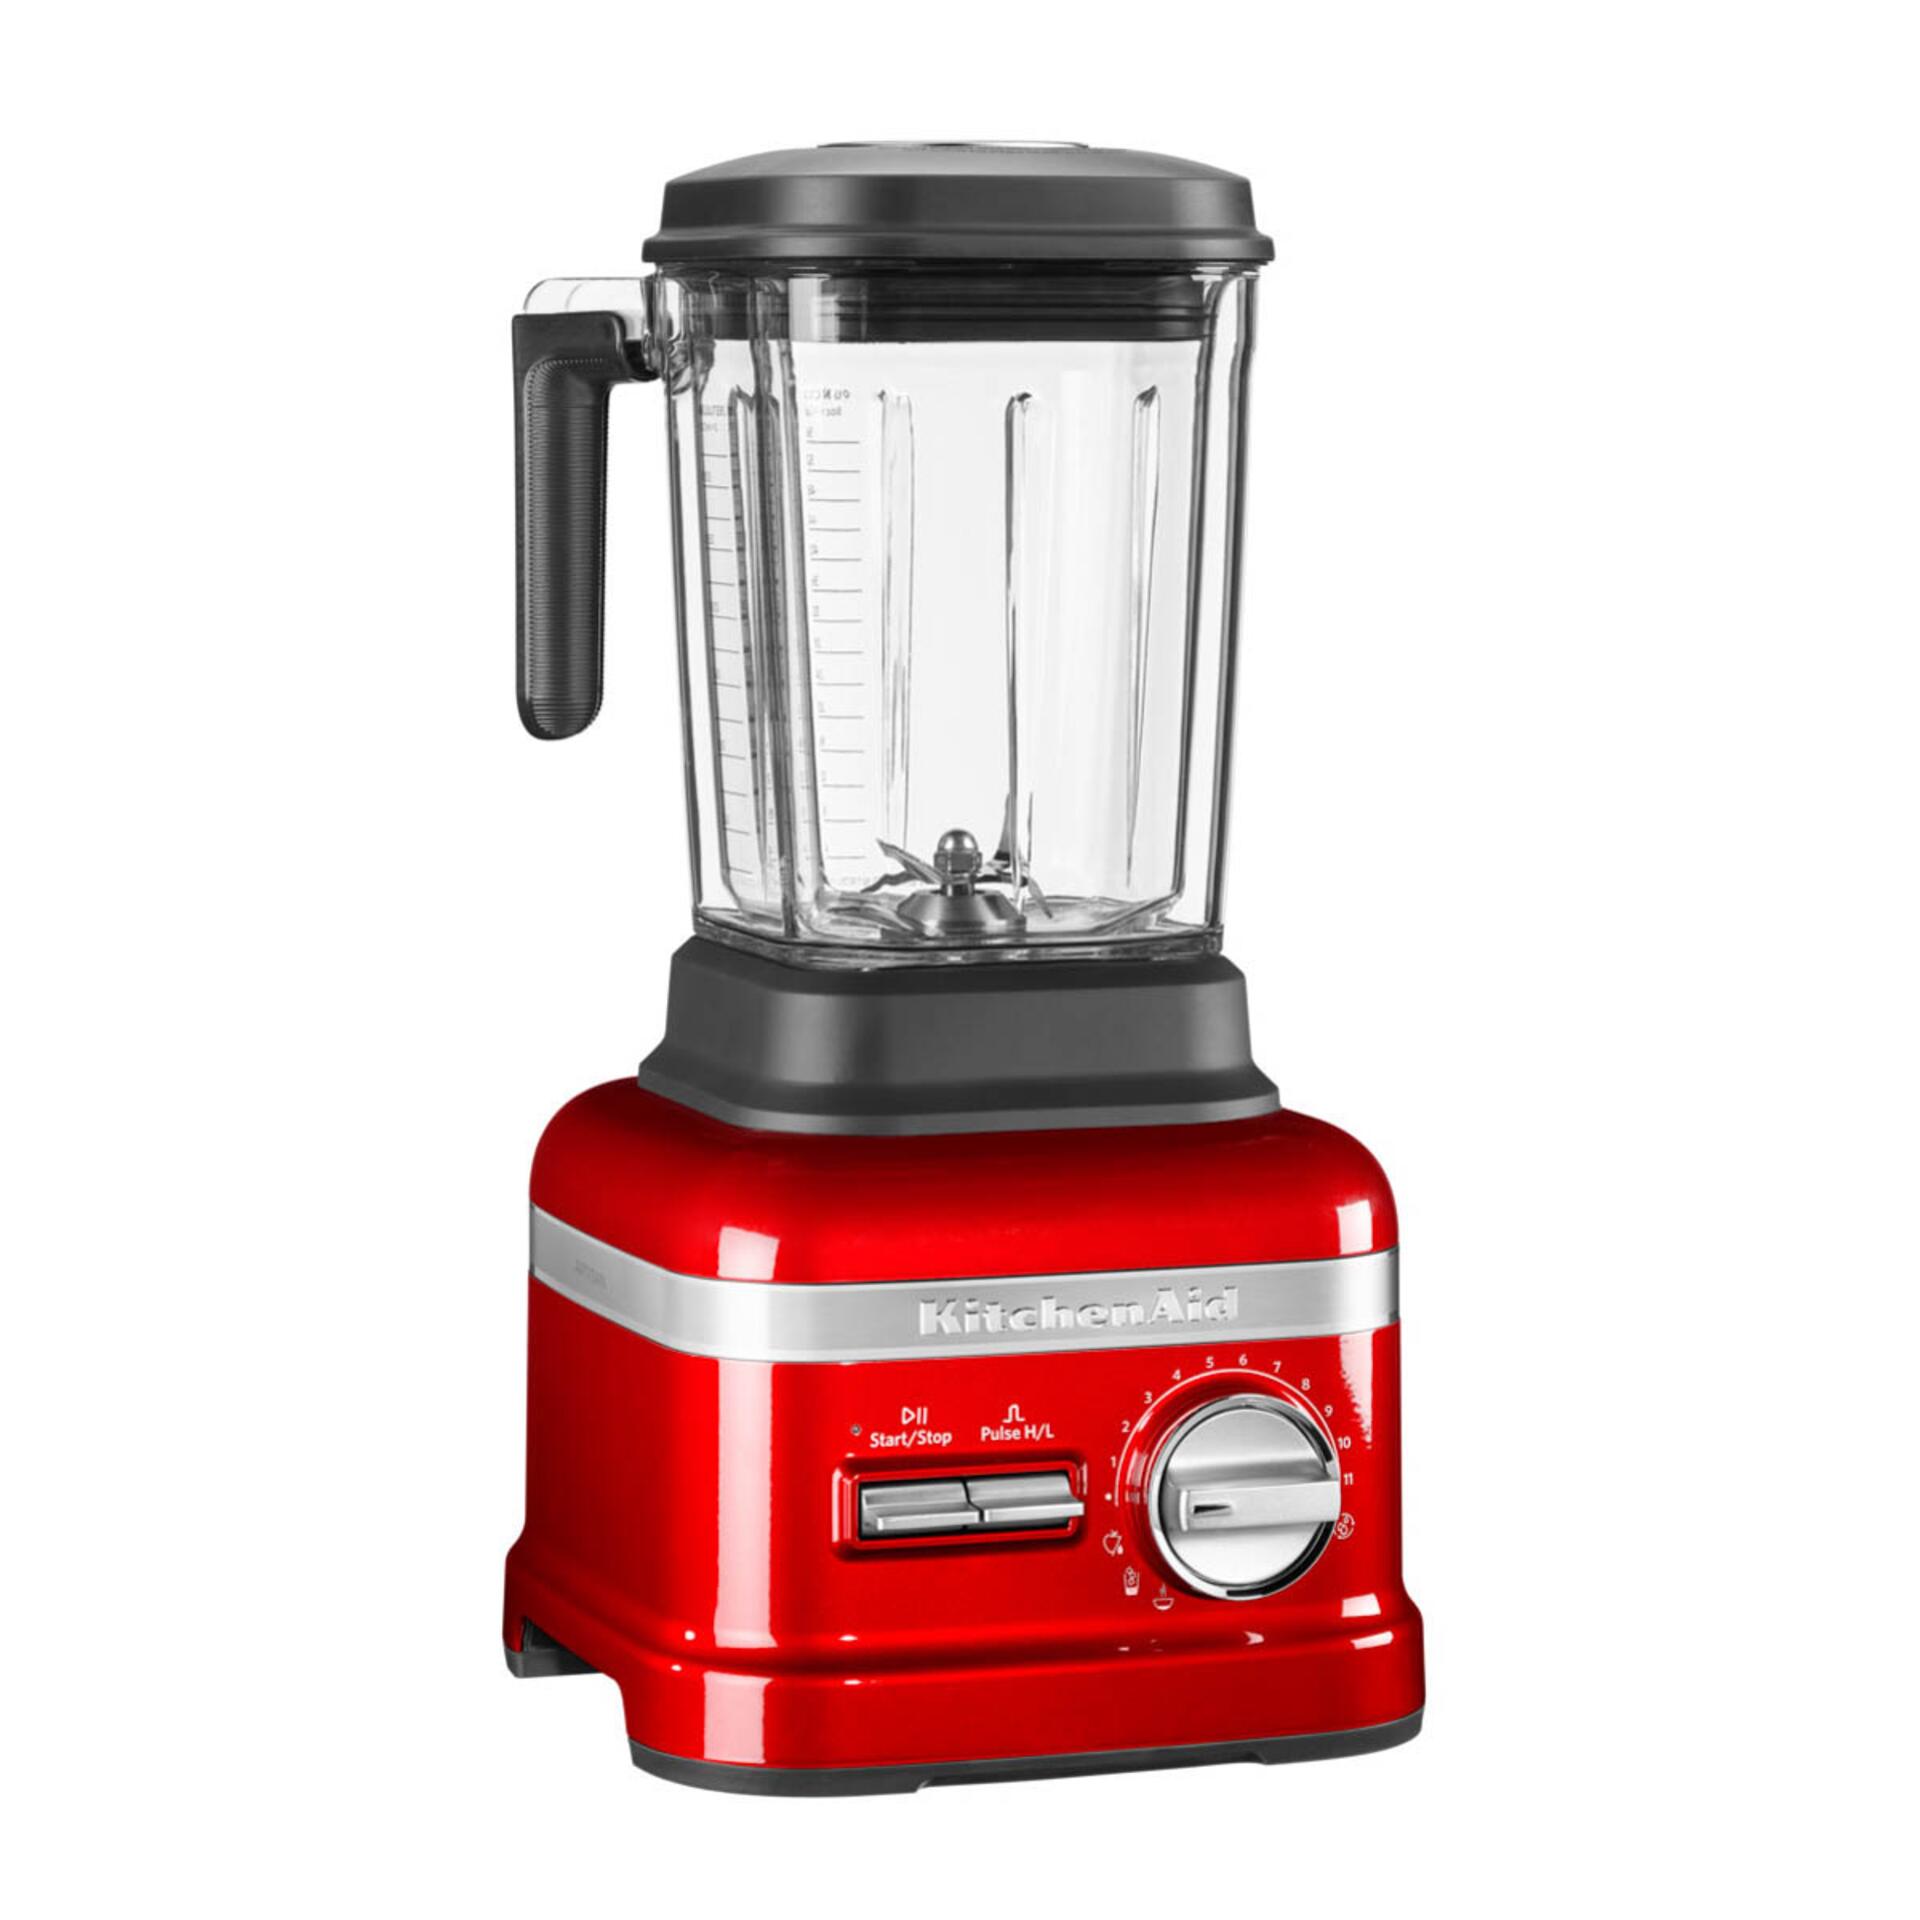 Kitchenaid Artisan Power Plus Blender Standmixer 5KSB8270 Liebesapfel Rot